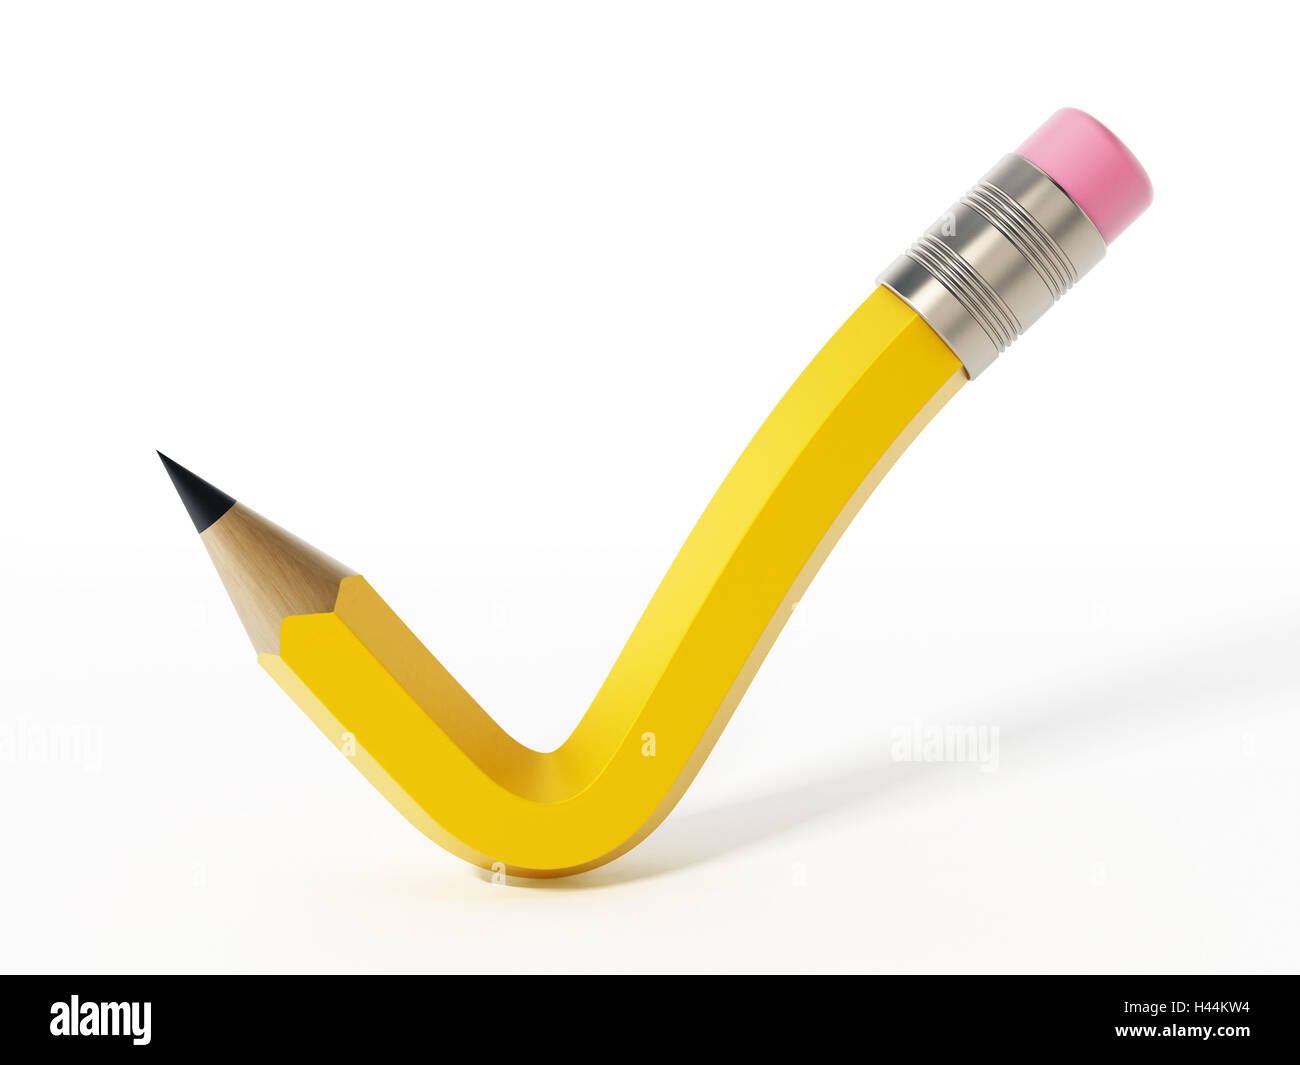 Pencil shaped like a checkmark symbol. 3D illustration. Stock Photo